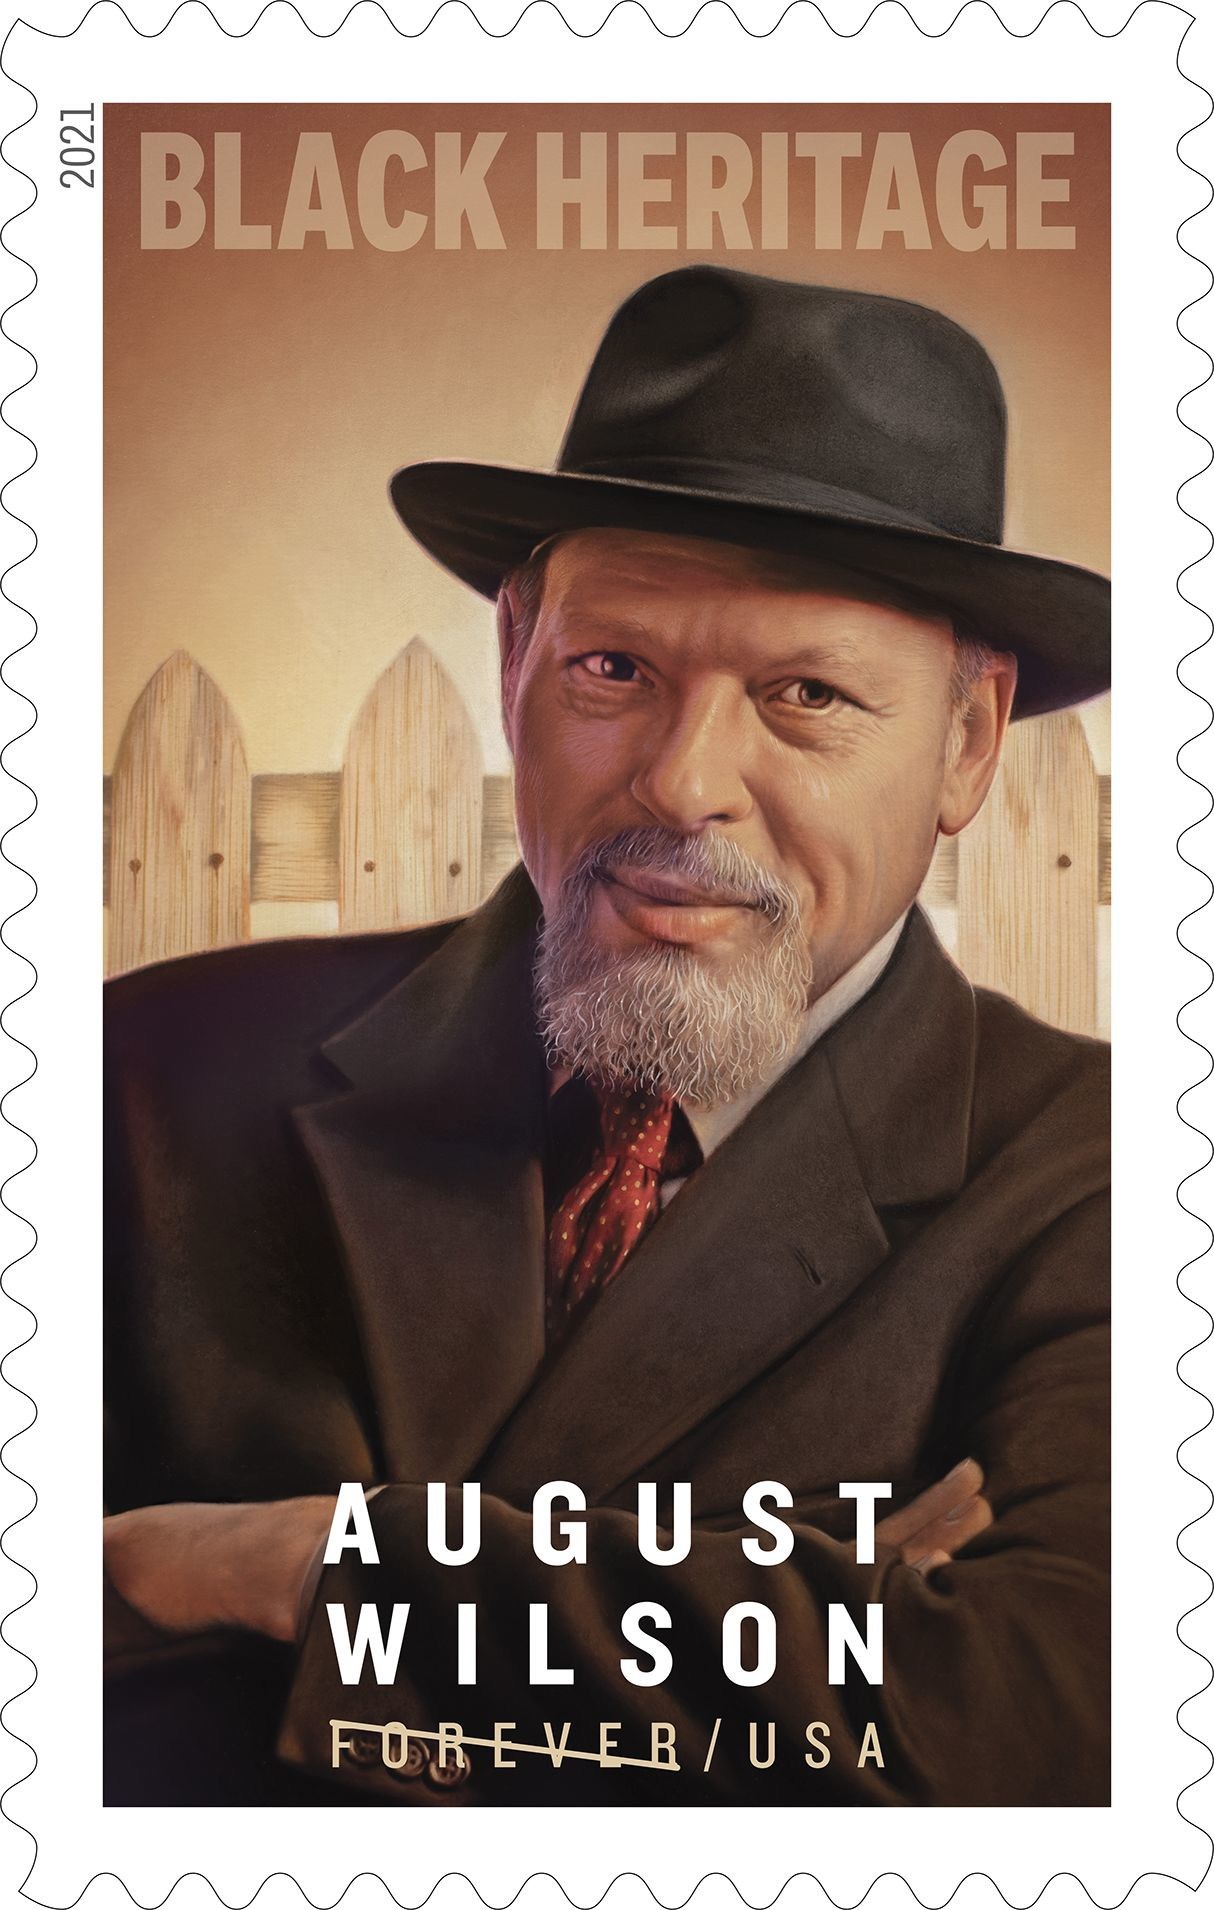 USPS August Wilson Stamp